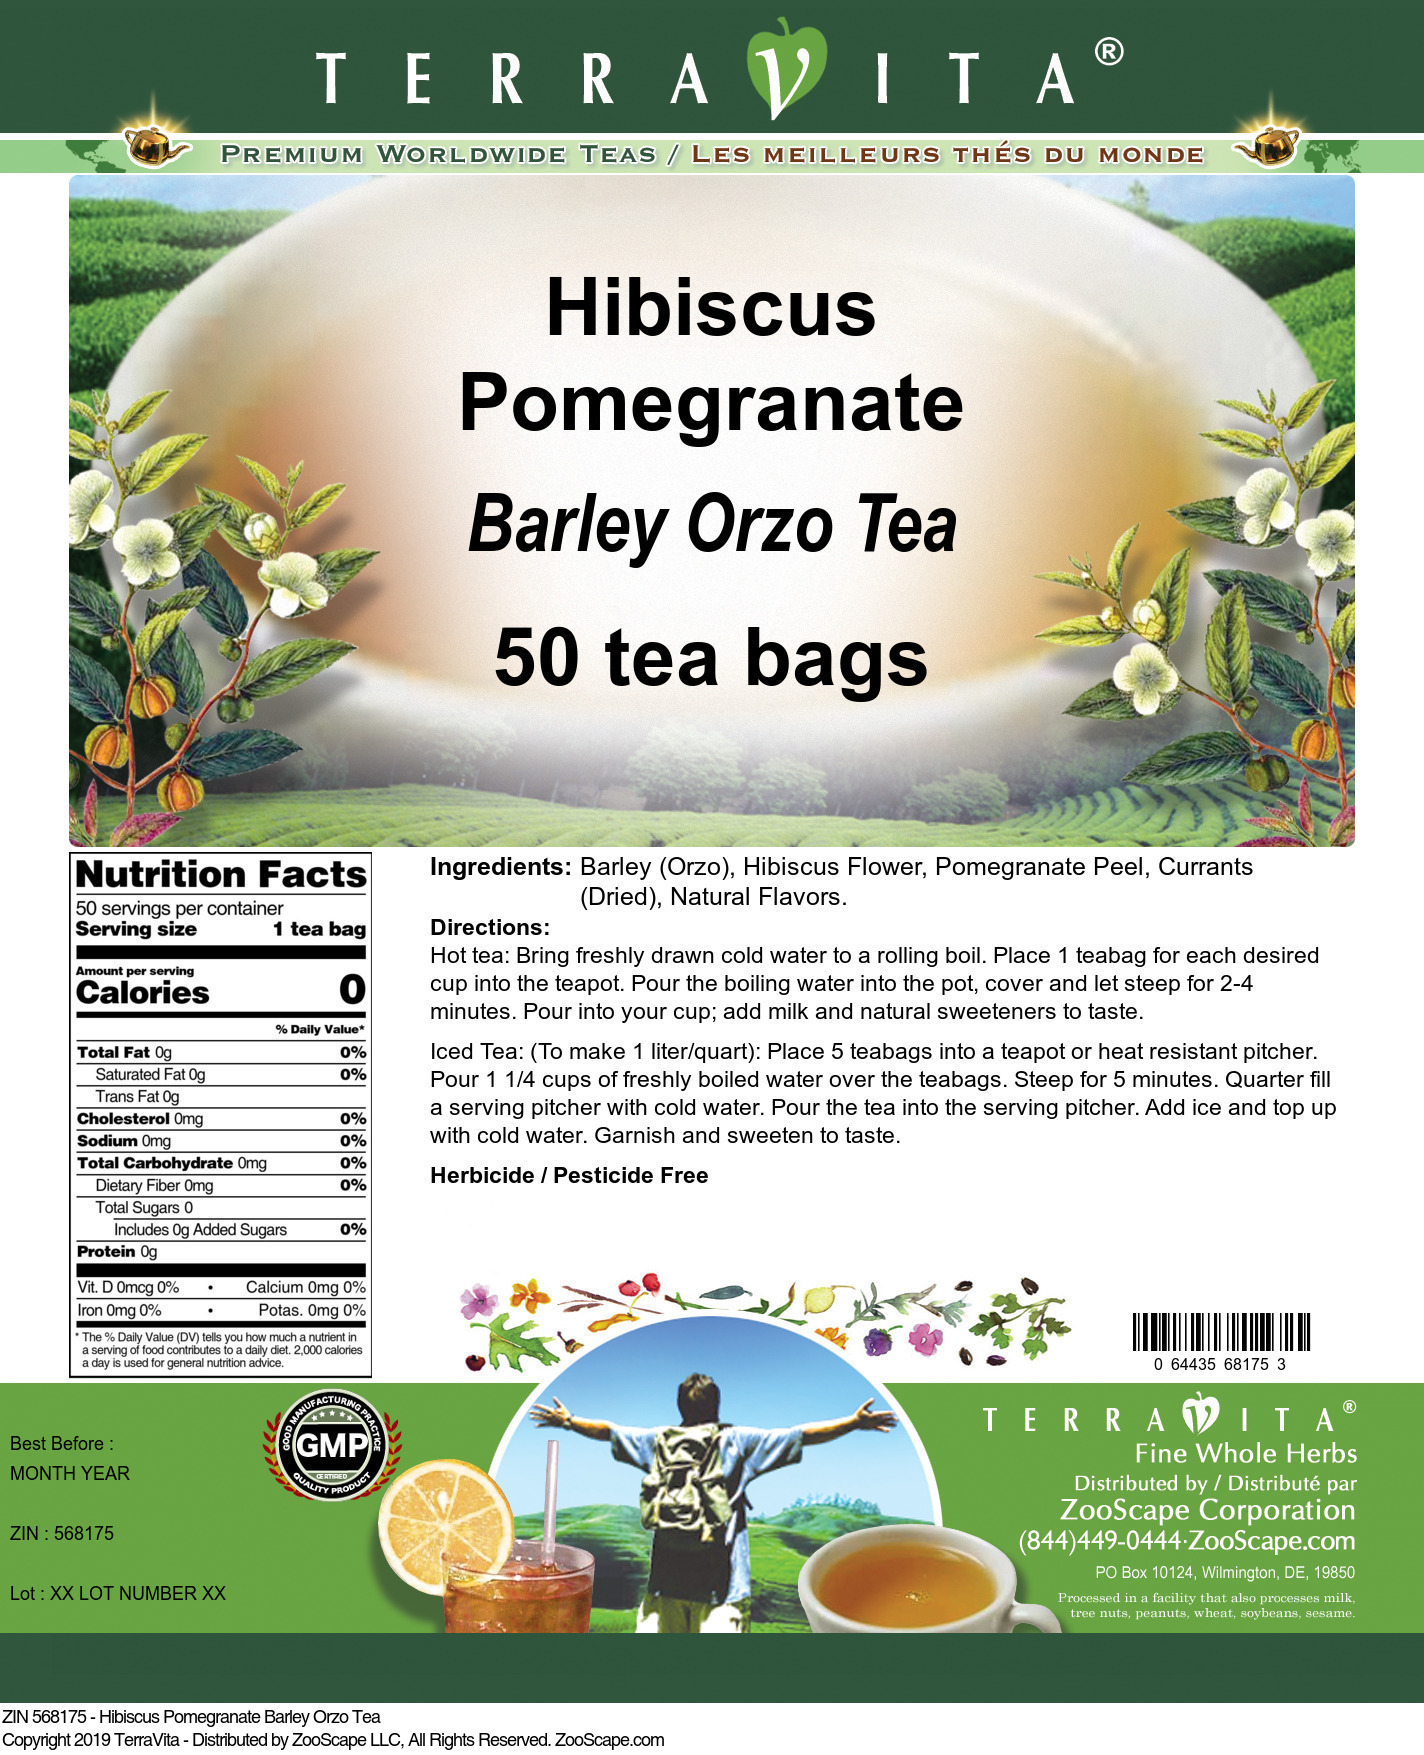 Hibiscus Pomegranate Barley Orzo Tea - Label